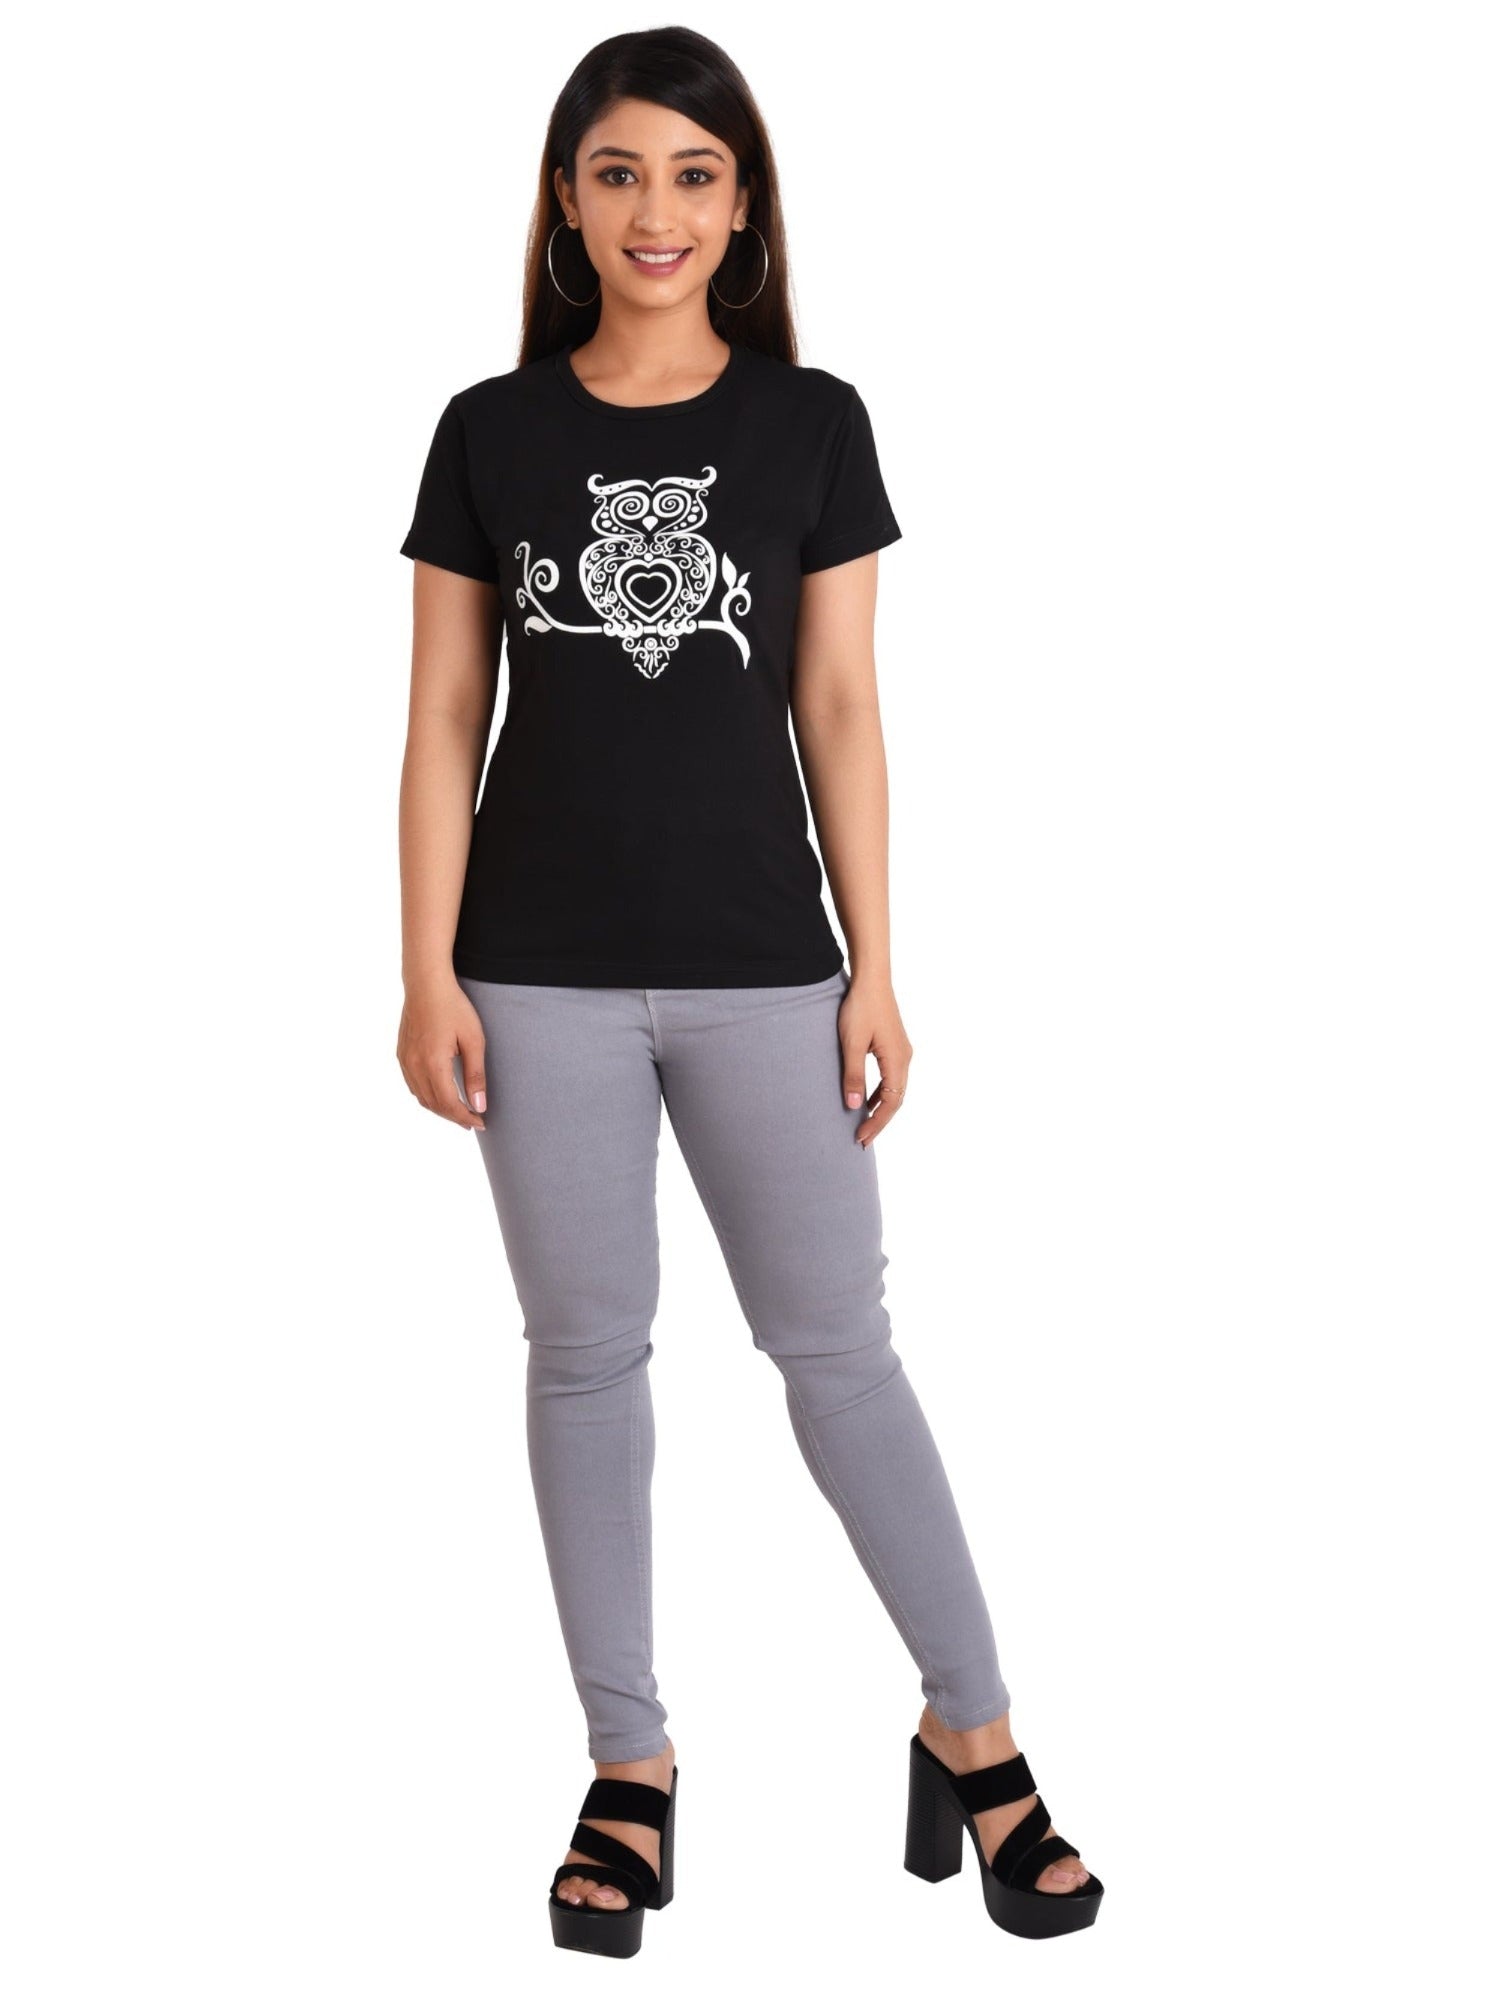 Women's Cotton Round Neck PLUS size T-shirt - OWL , front view